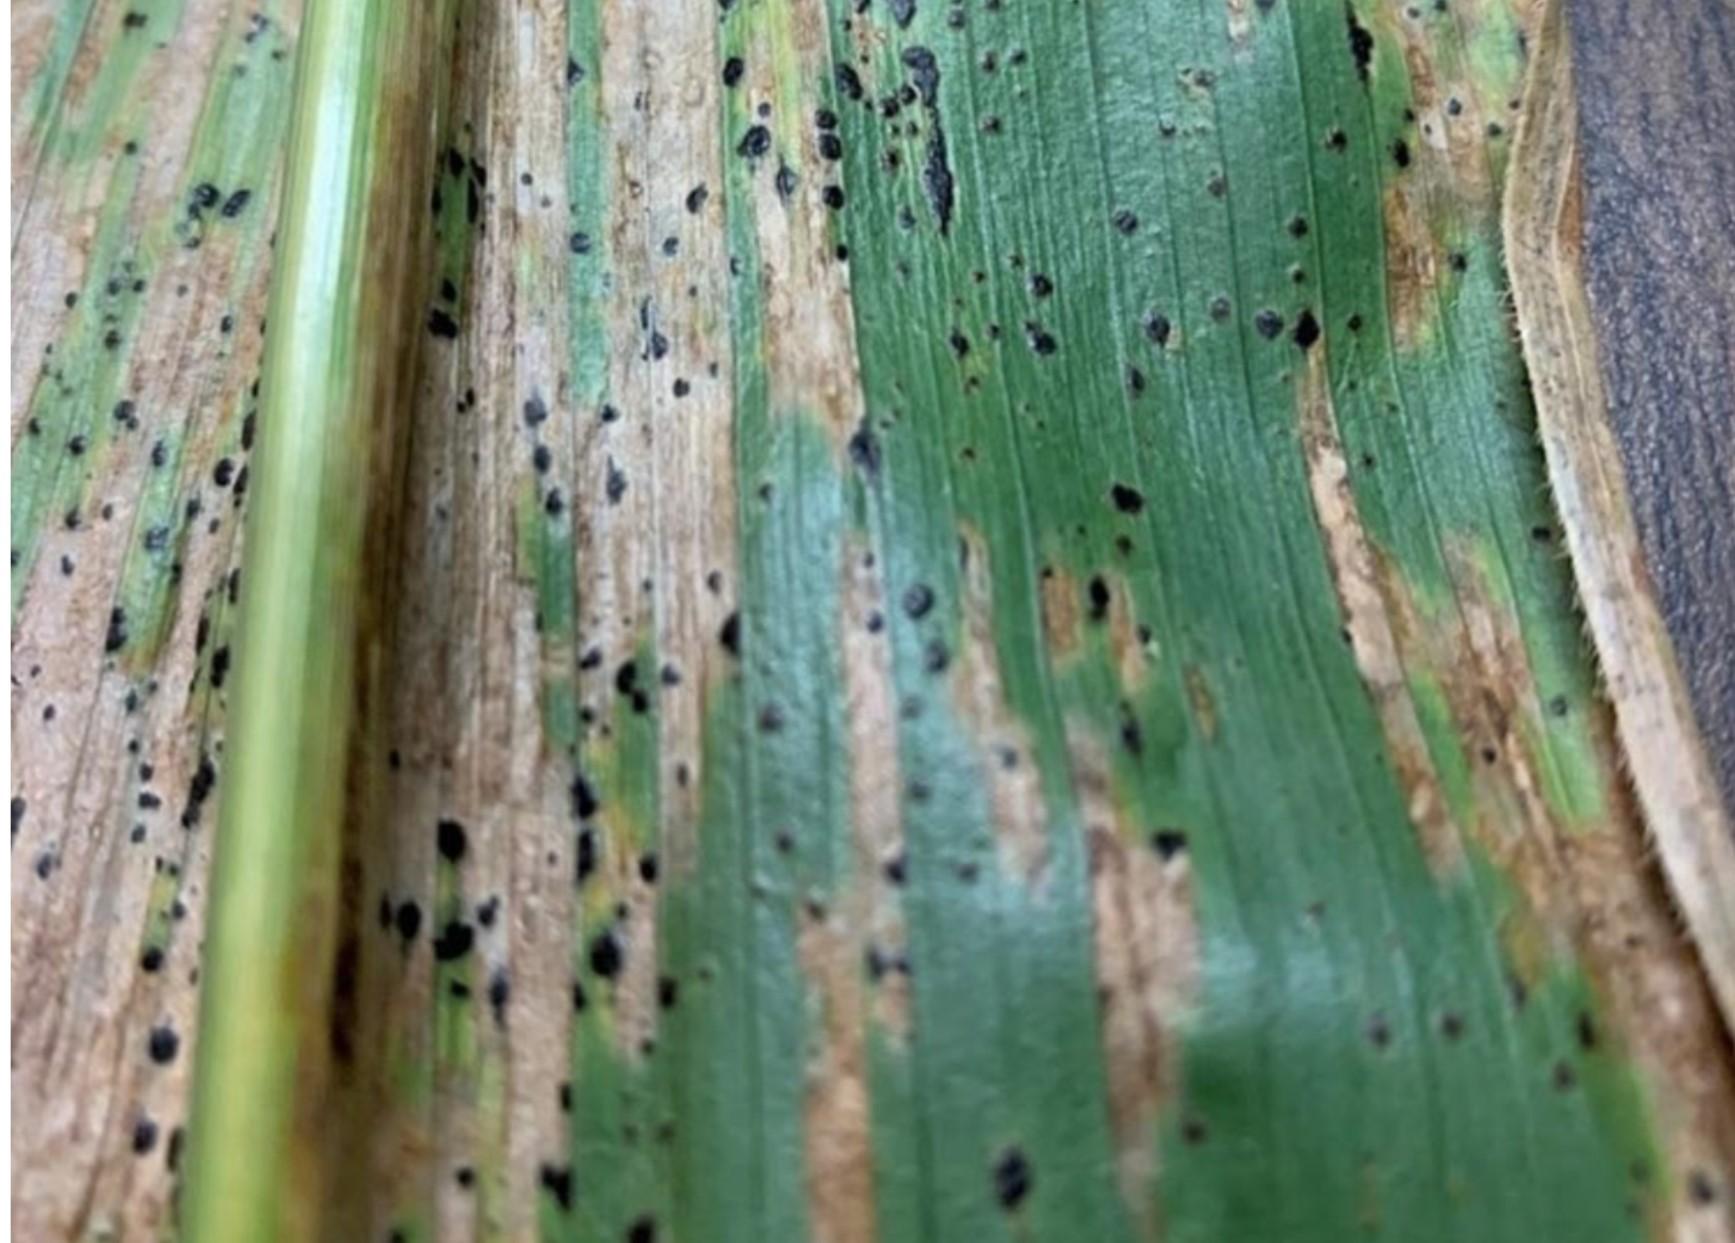 Figure 2. Tar spot symptoms on a corn leaf. Image Credit: A. Collins, Penn State